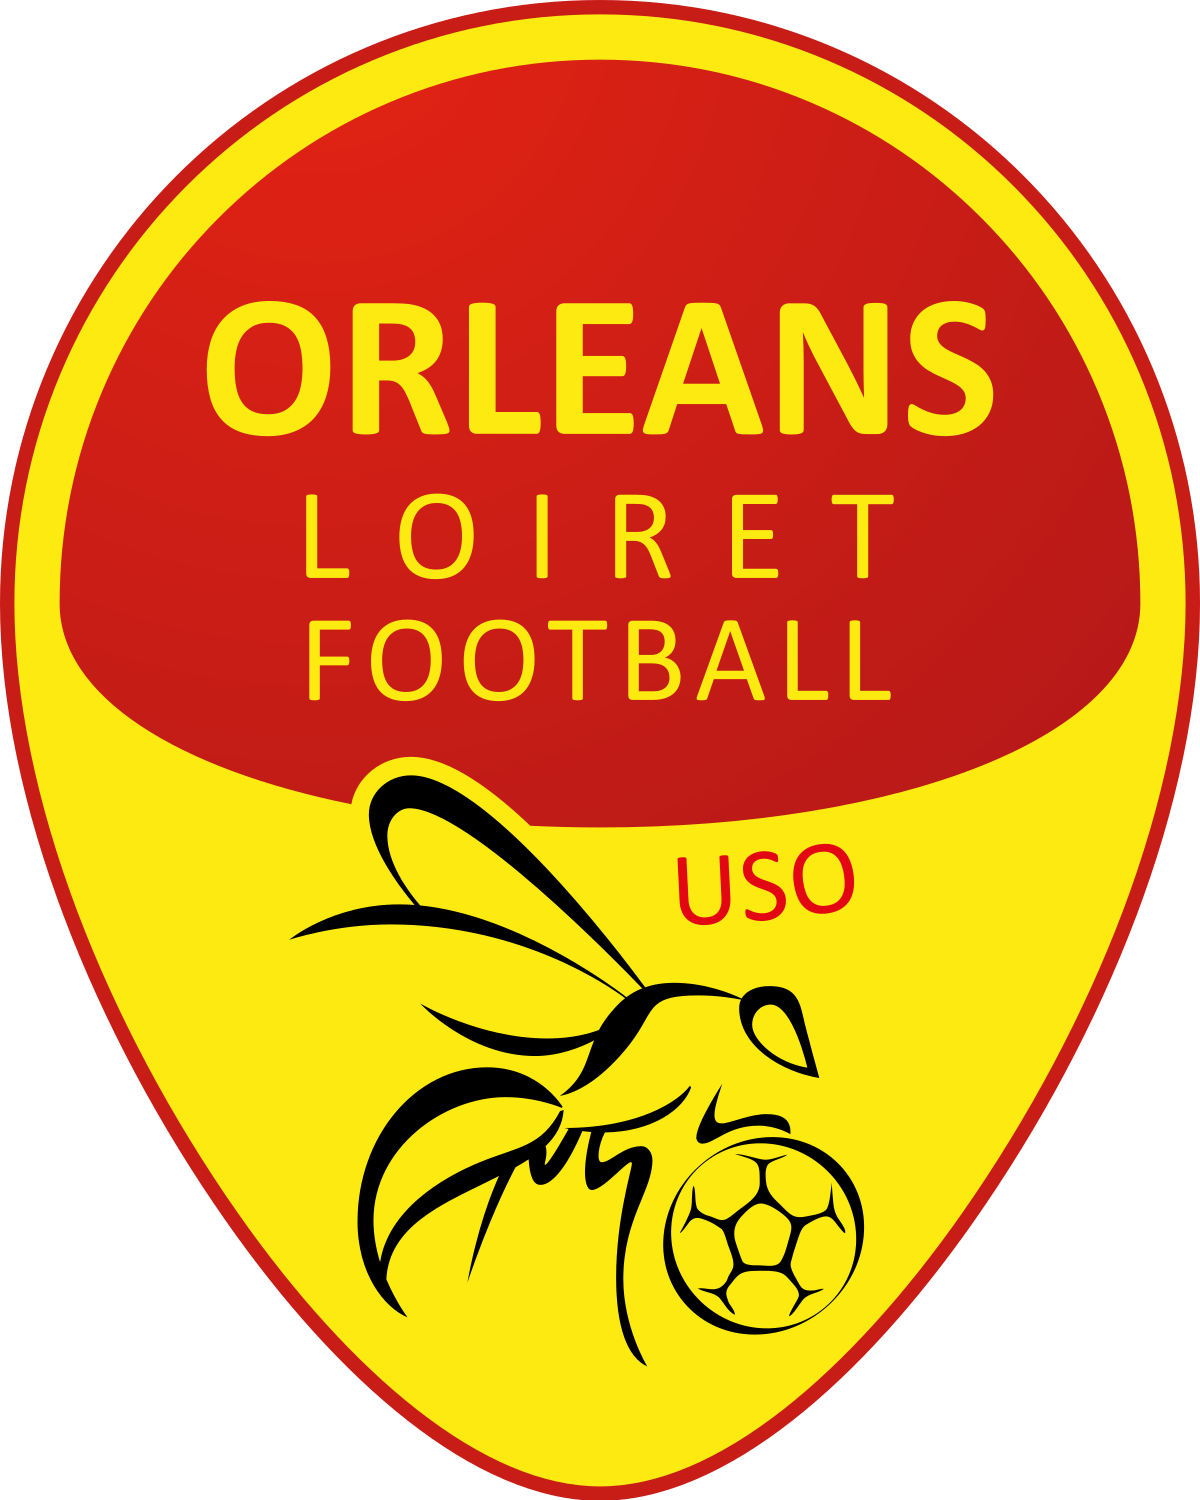 Uso Logo - Union sportive Orléans Loiret football — Wikipédia